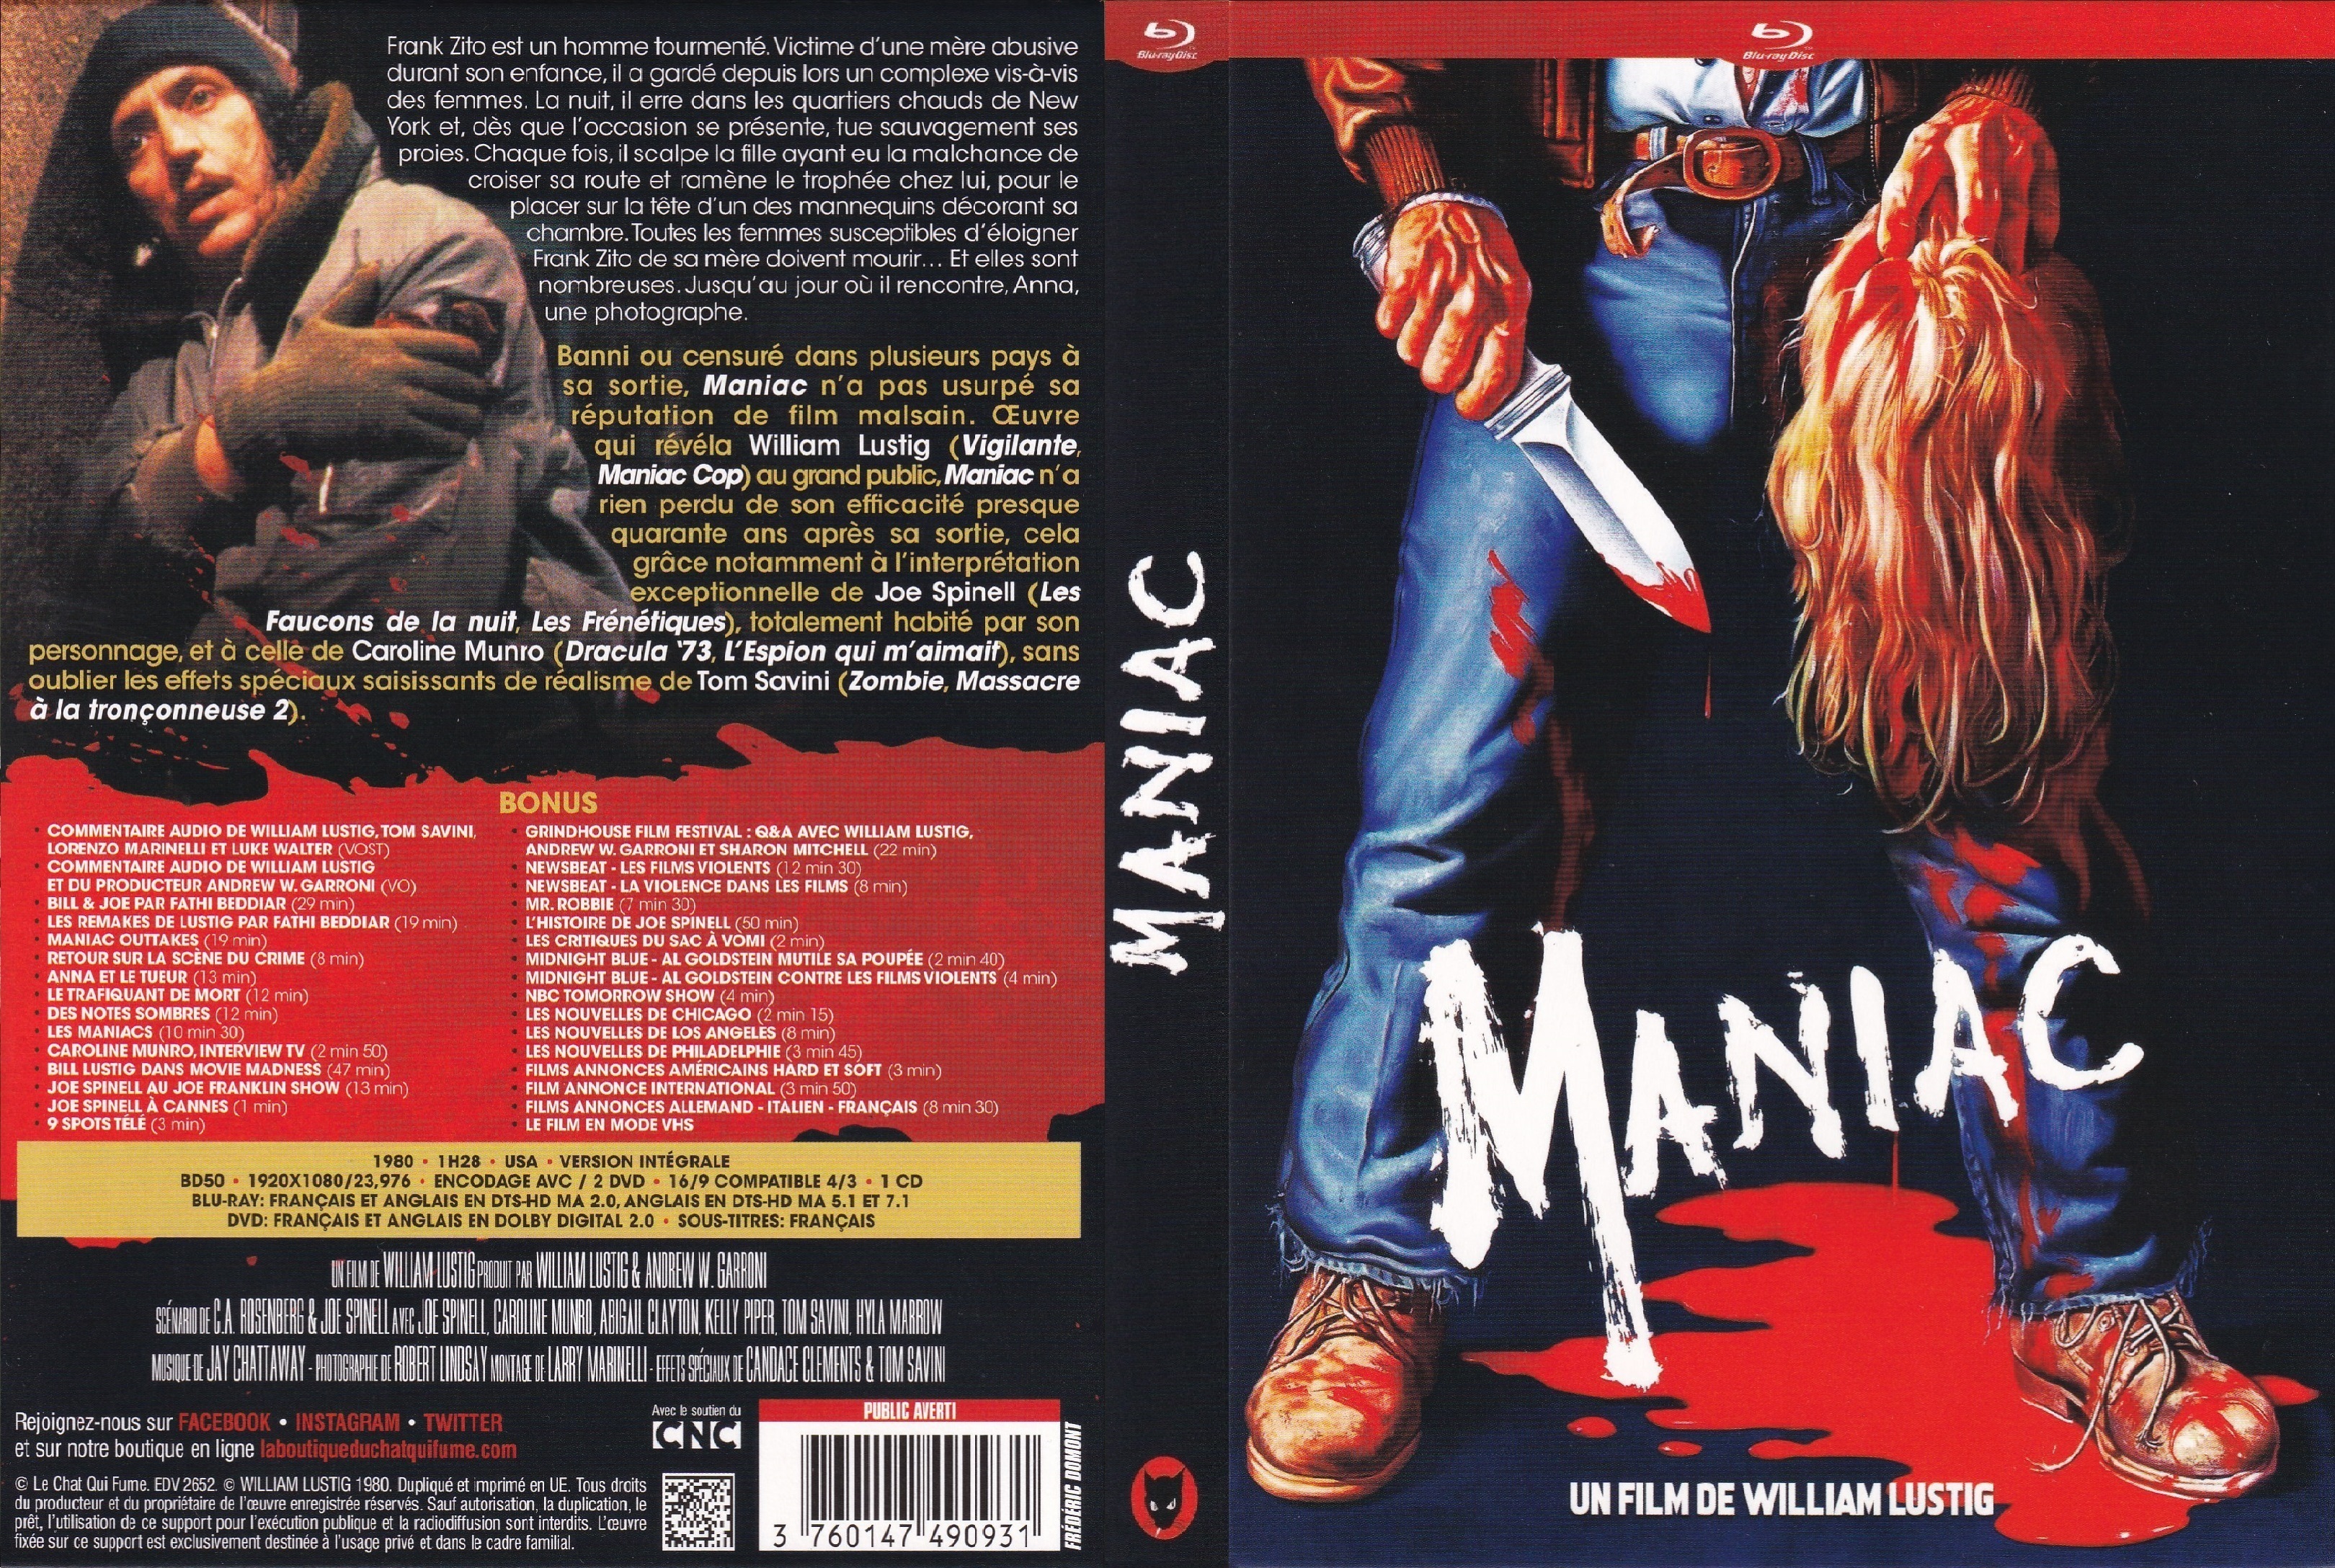 Jaquette DVD Maniac (BLU-RAY)